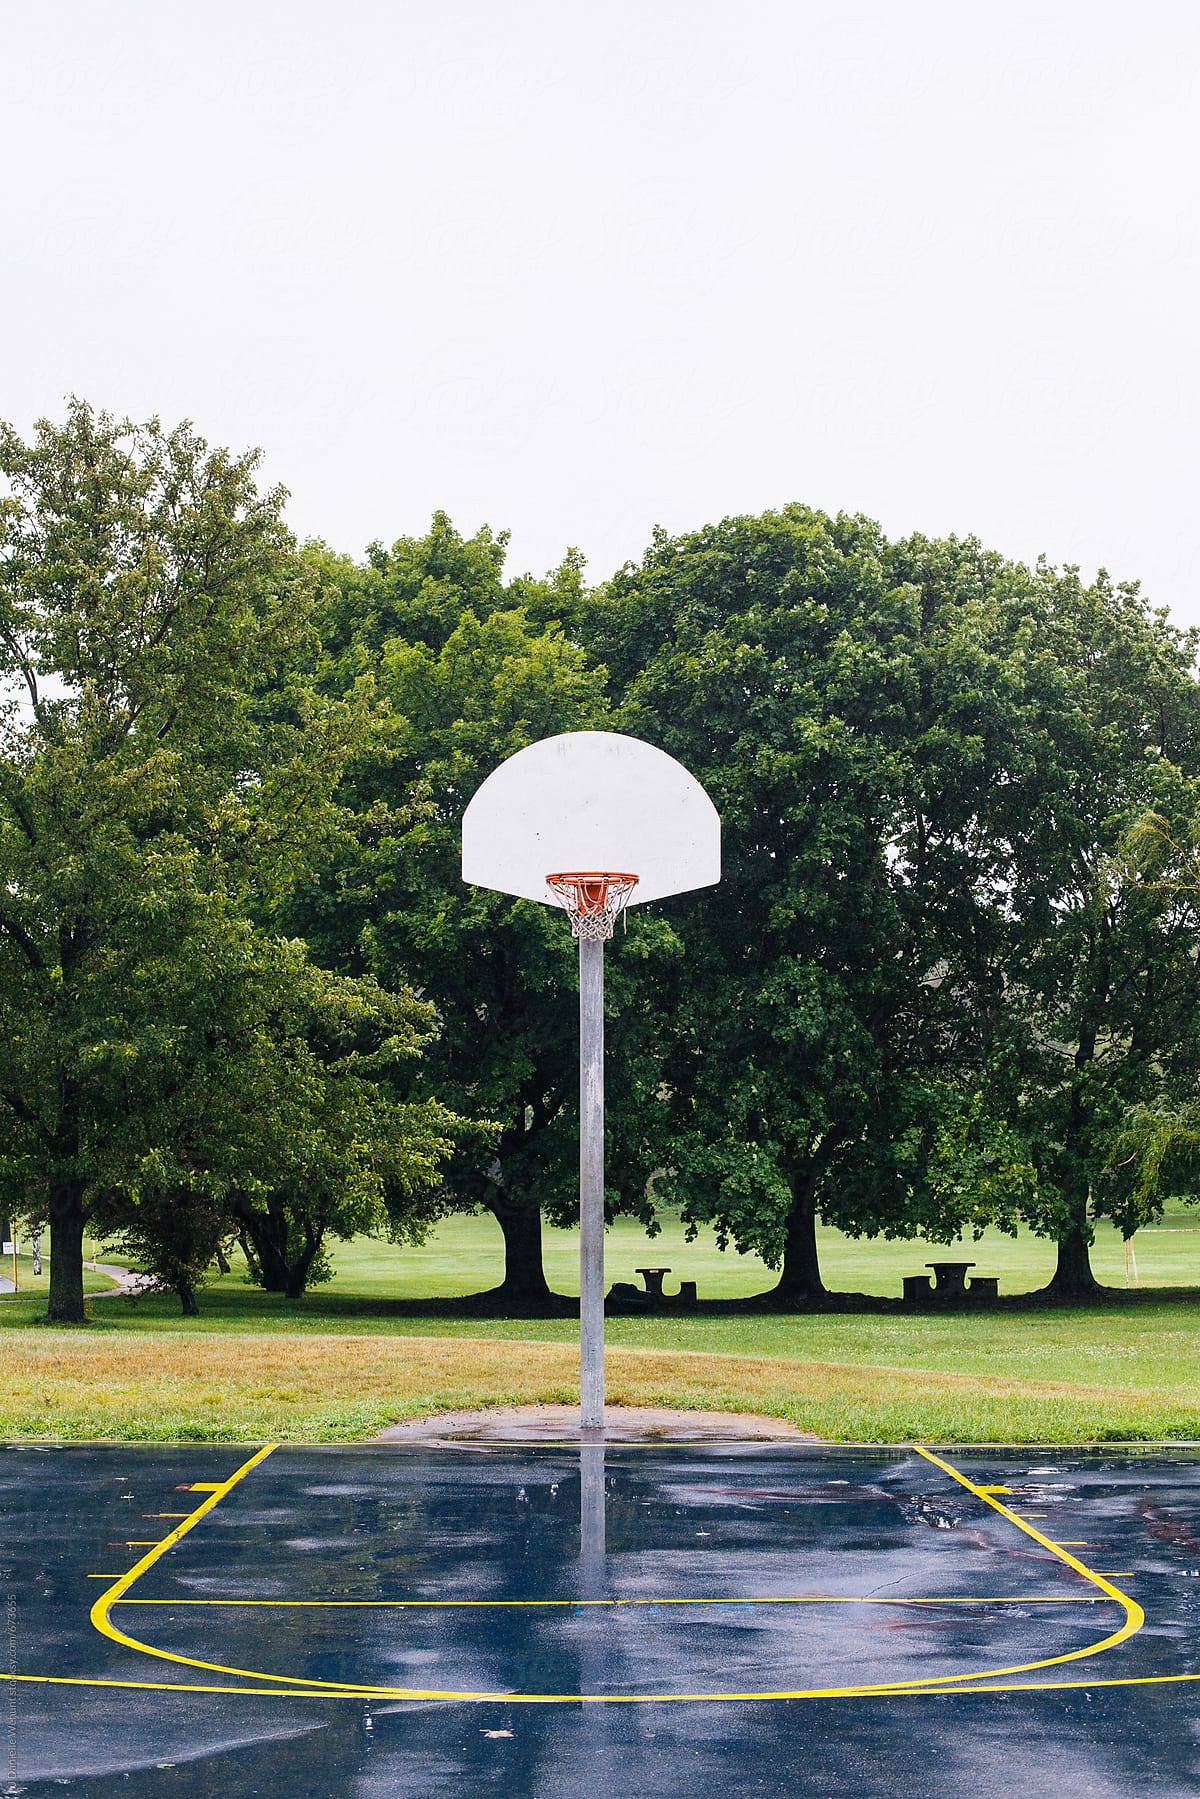 An empty basketball court after the rain.